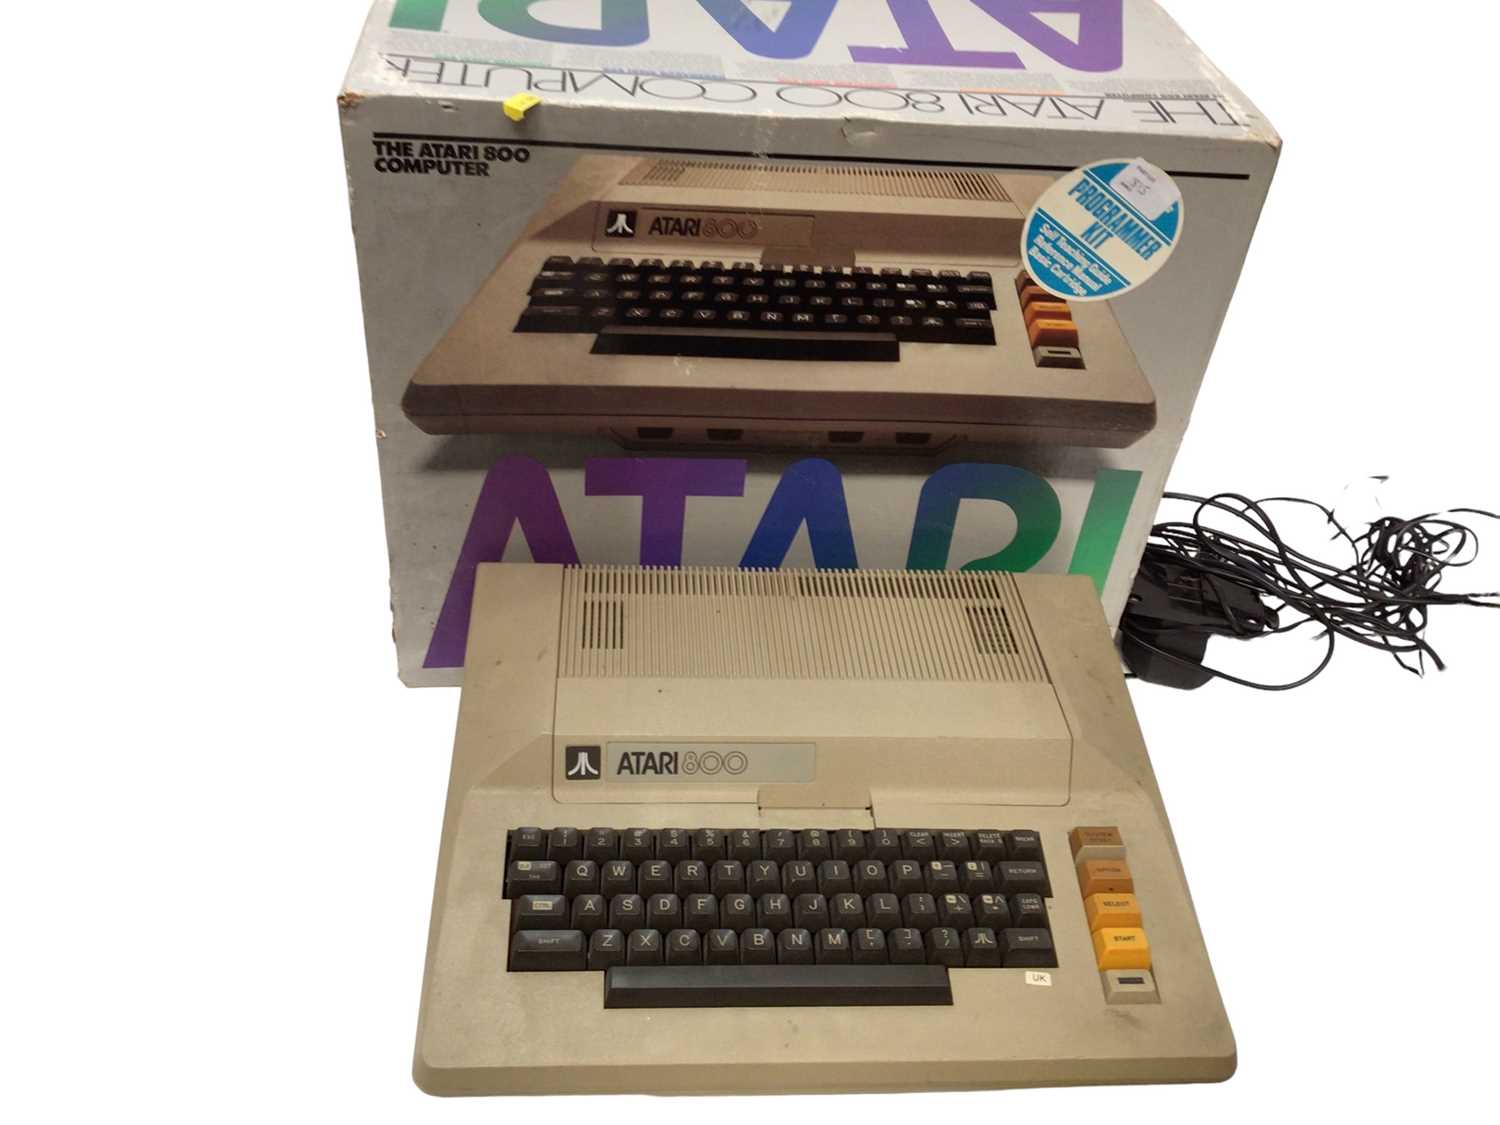 Lot 1815 - The Atari 800 Computer, The Atari 410 Program Recorder, both in orignal boxes, various joysticks, selection of Atari 400/800 games and other items